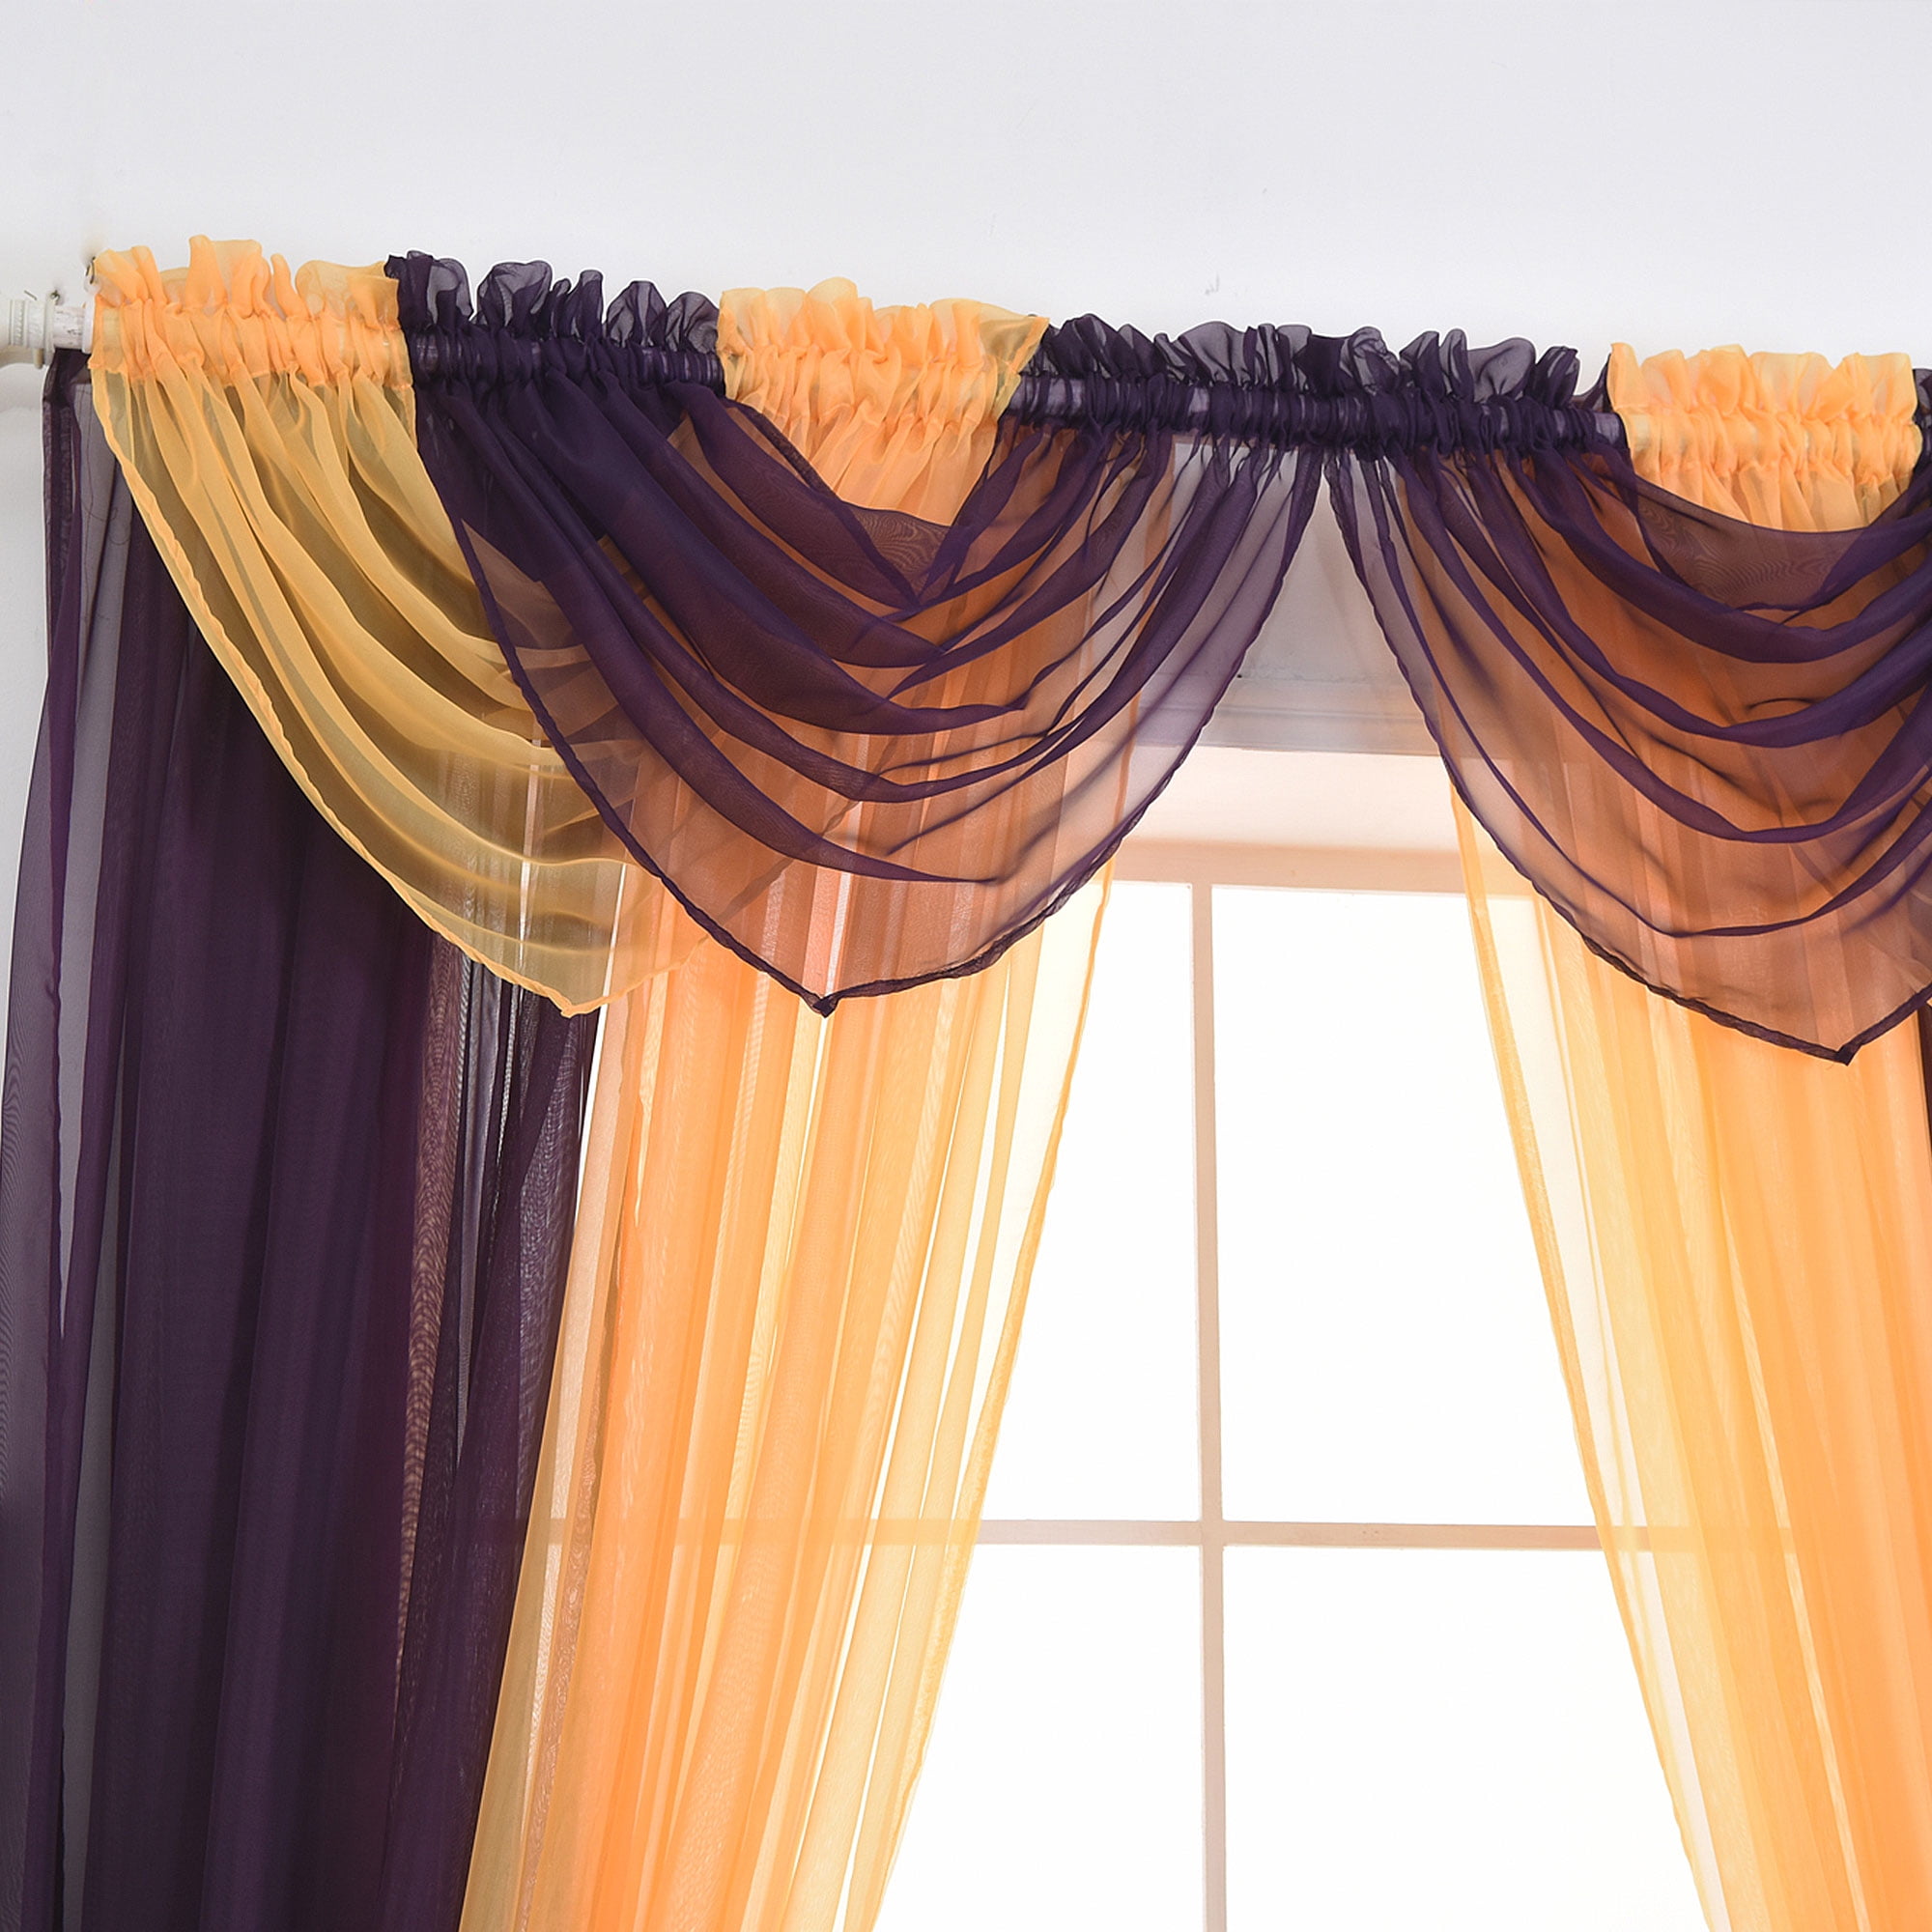 Hot Sale Room Door Window Curtain Drape Panel Scarf Assorted Scarf Sheer Voile 